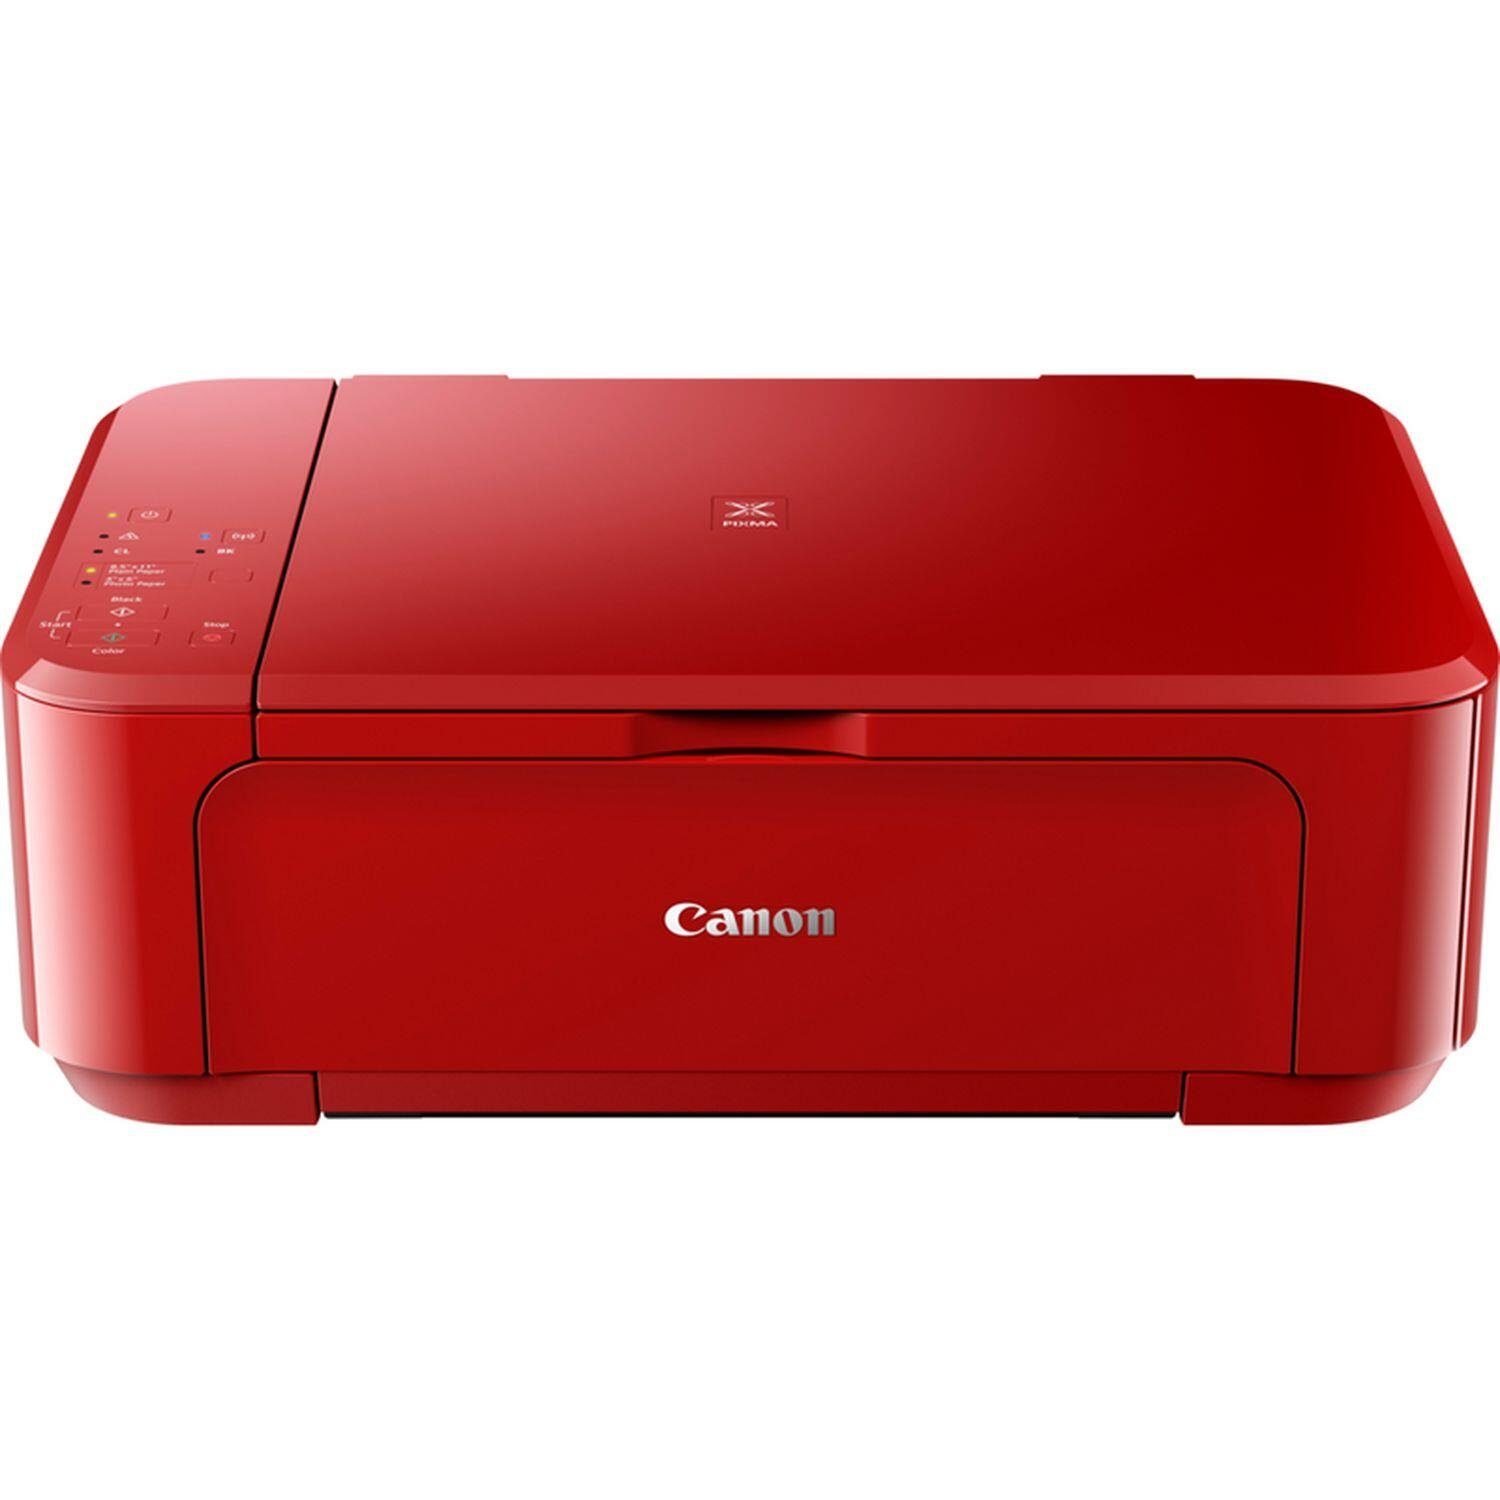 Canon Canon PIXMA Duplexdruck) Tintenstrahldrucker, automatischer MG3650S (WLAN